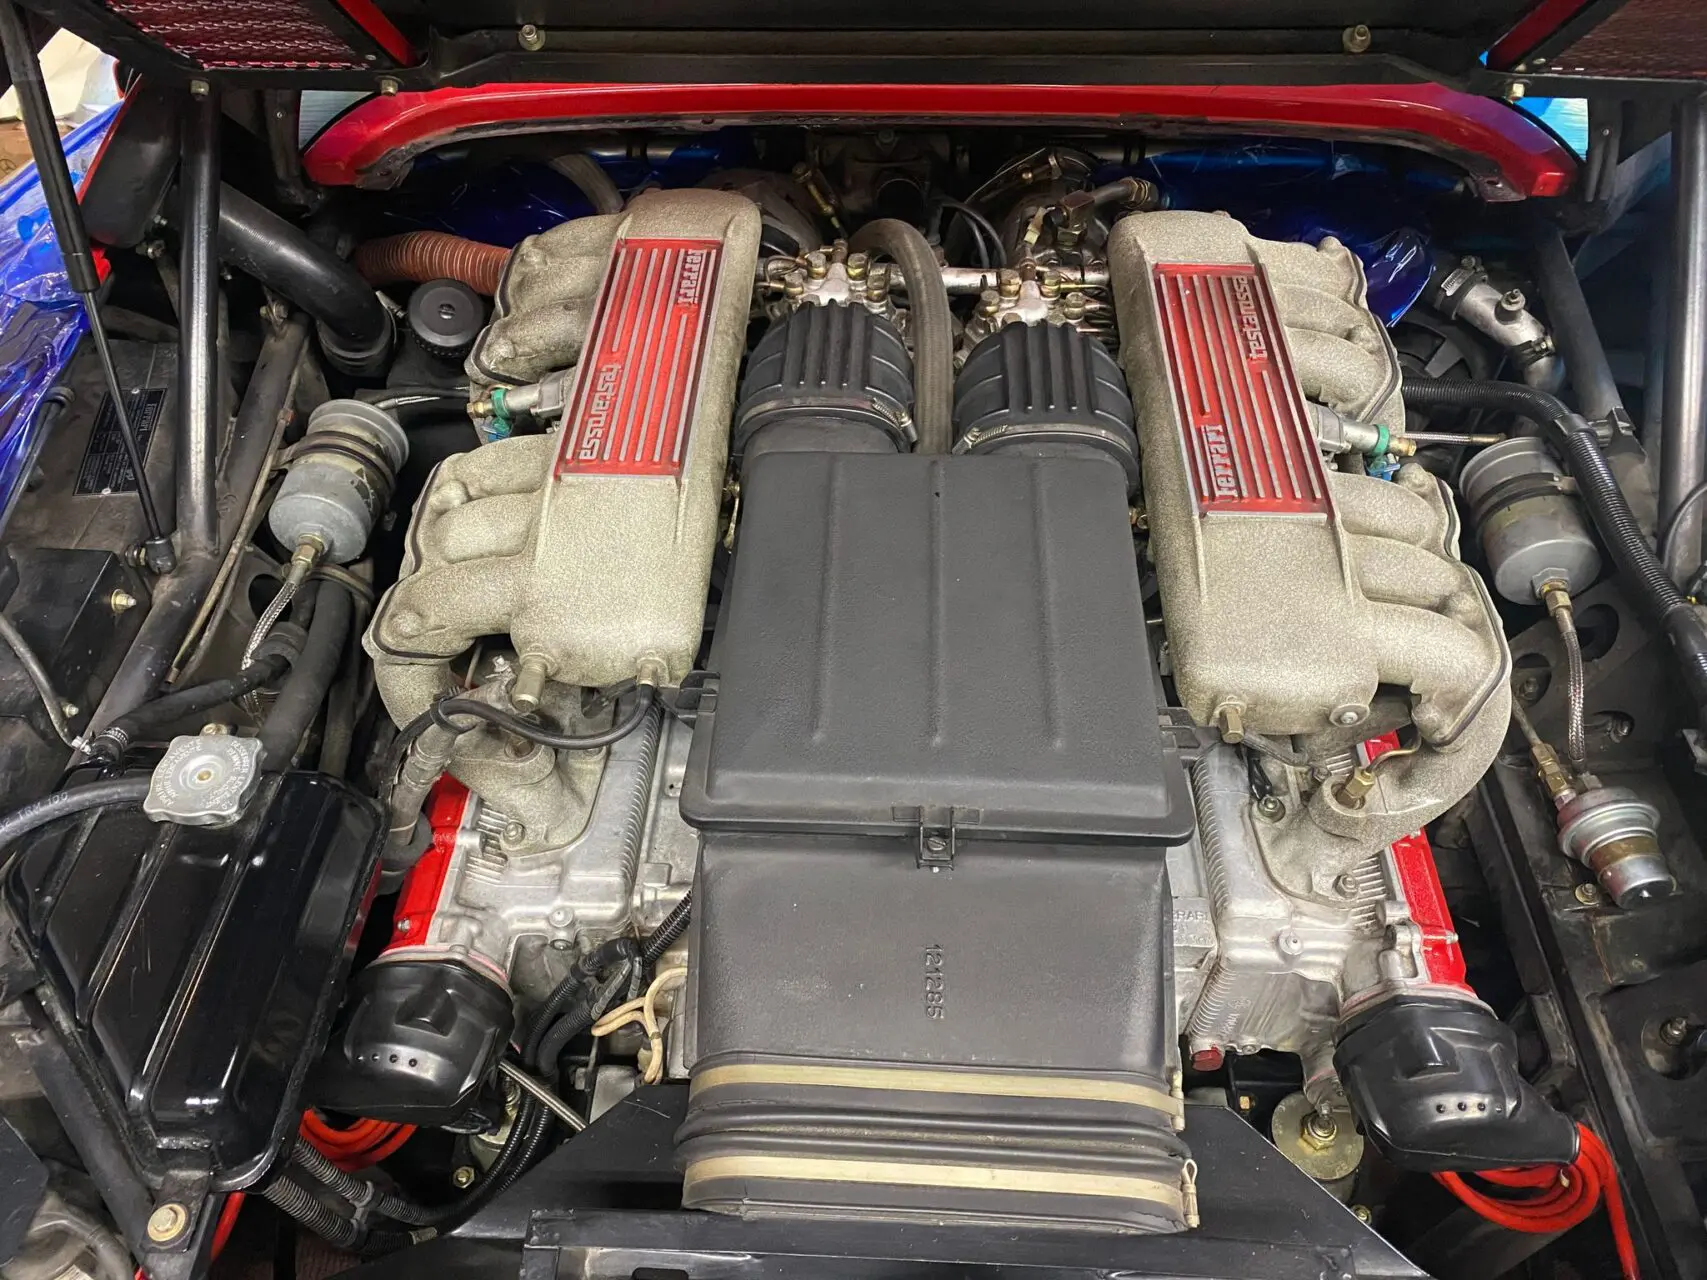 NEWINGカスタムインテリア 憧れの名車Ferrari Testarossaの内装張